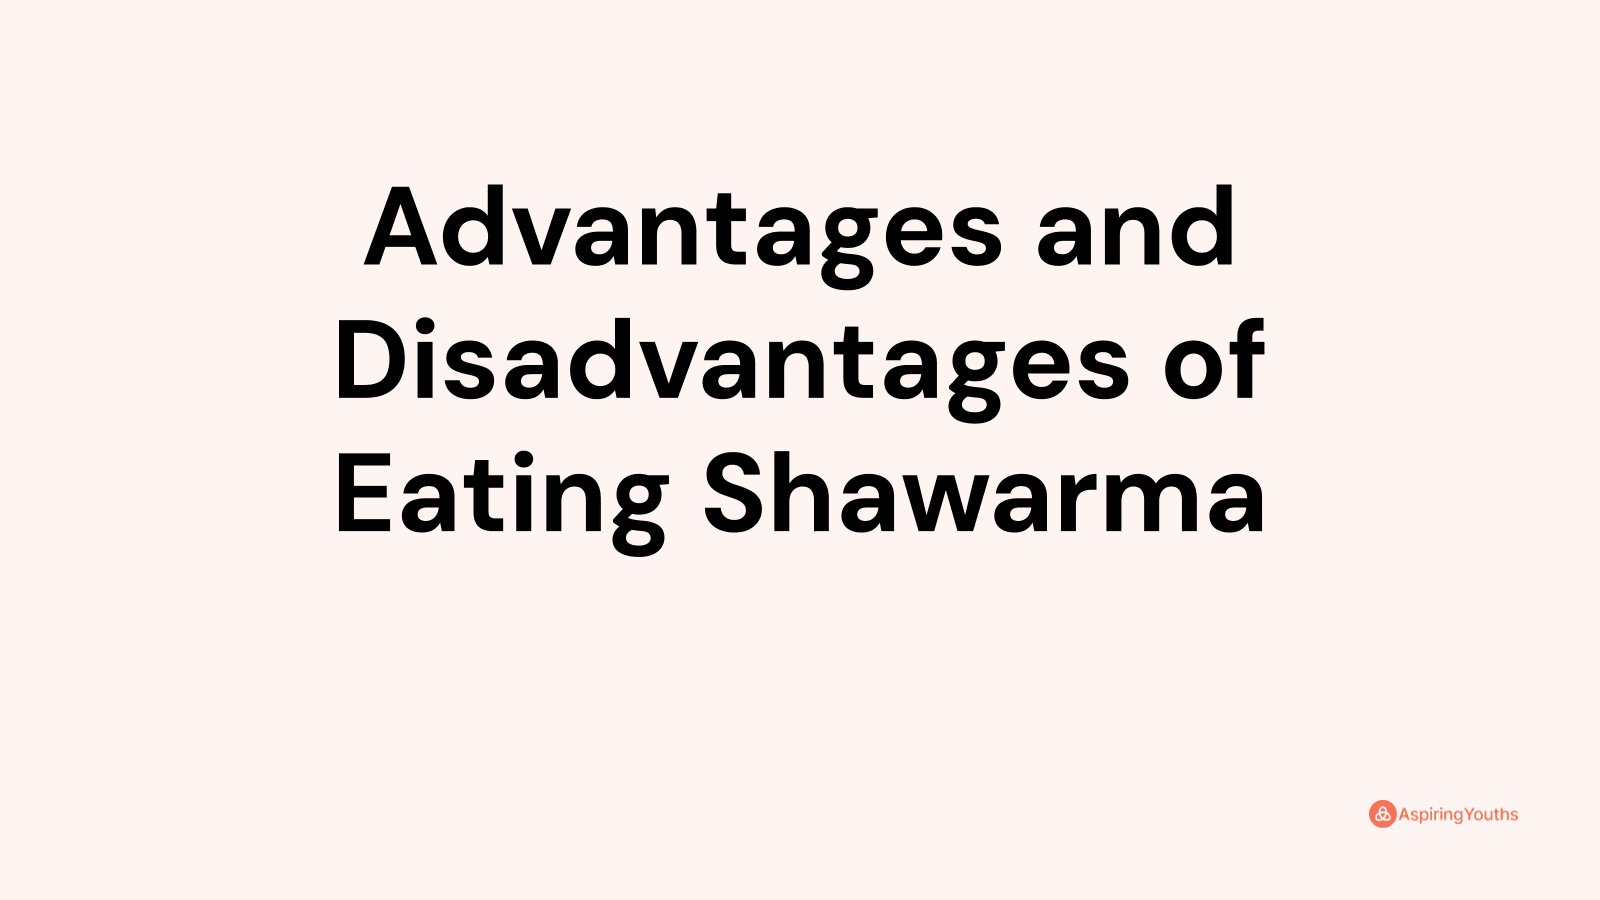 Advantages and disadvantages of Eating Shawarma